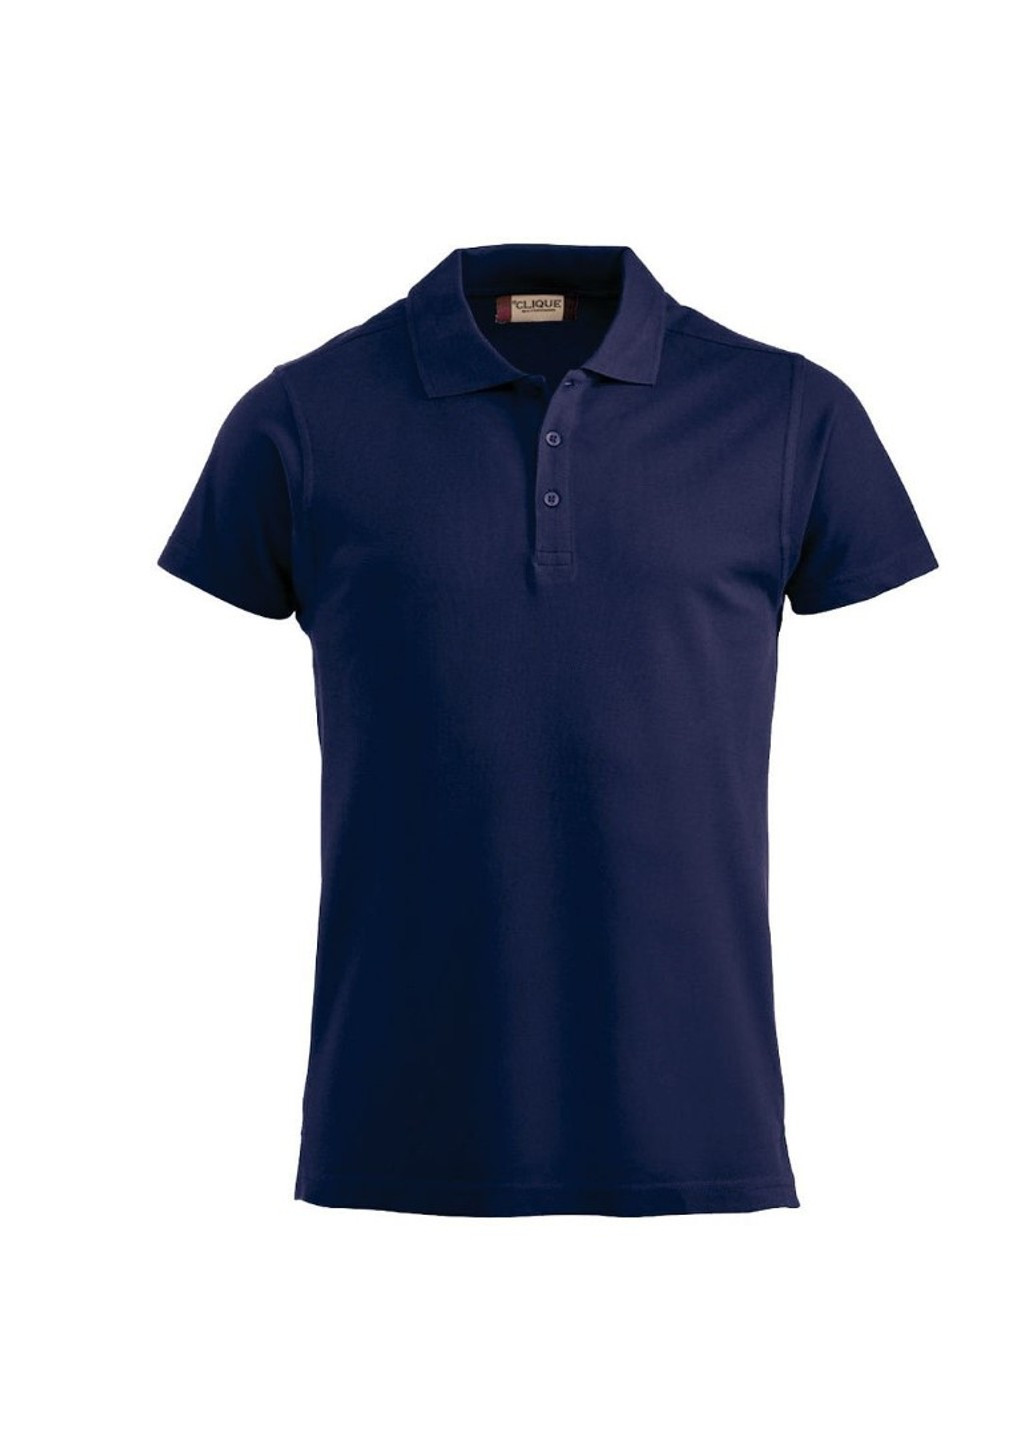 Темно-синяя футболка polo style gibson темно- синего цвета Clique